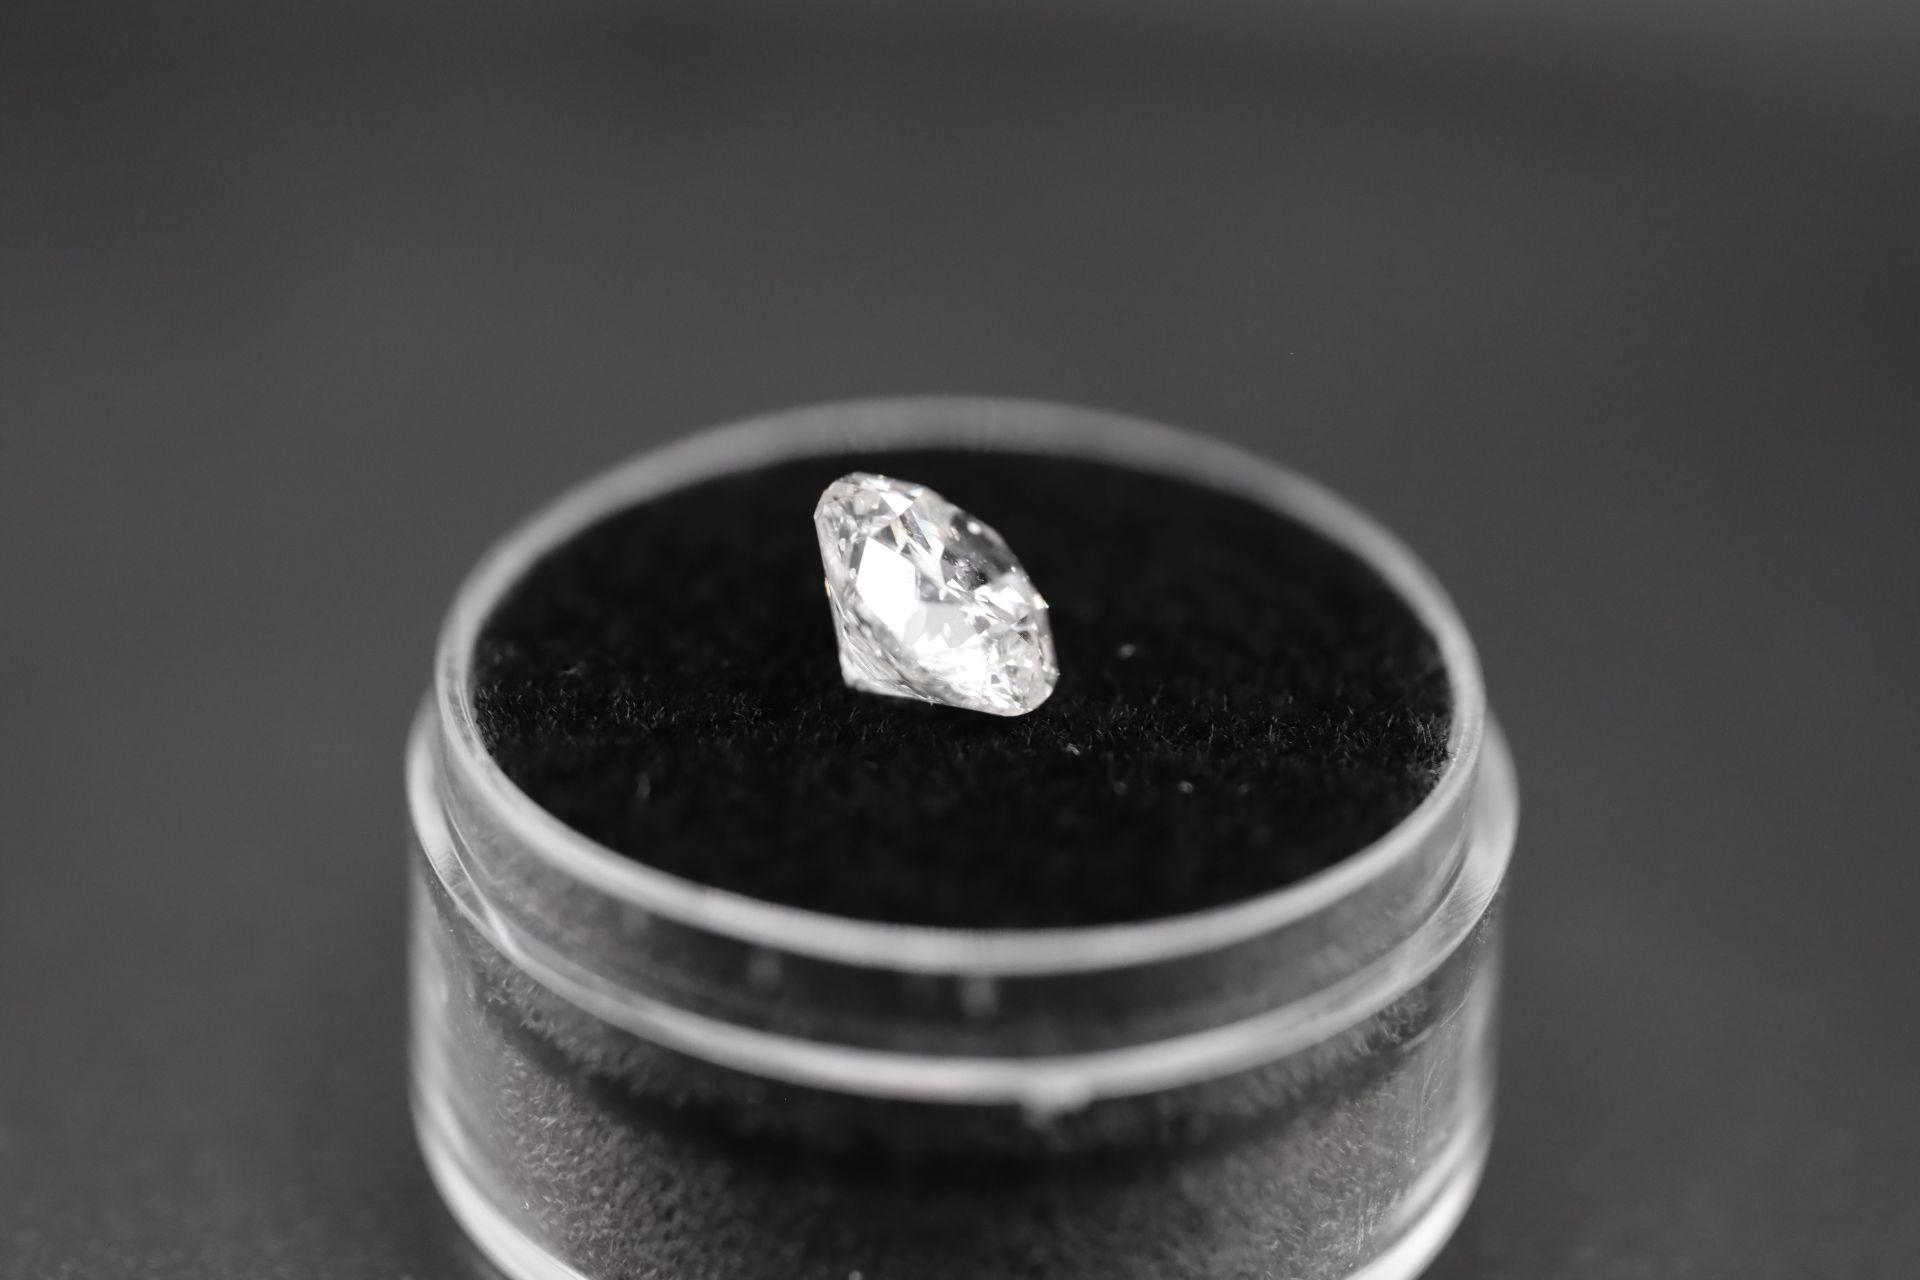 Round Brilliant Cut Natural Diamond 2.01 Carat Colour D Clarity VS1 - DGI Certificate - Image 24 of 24